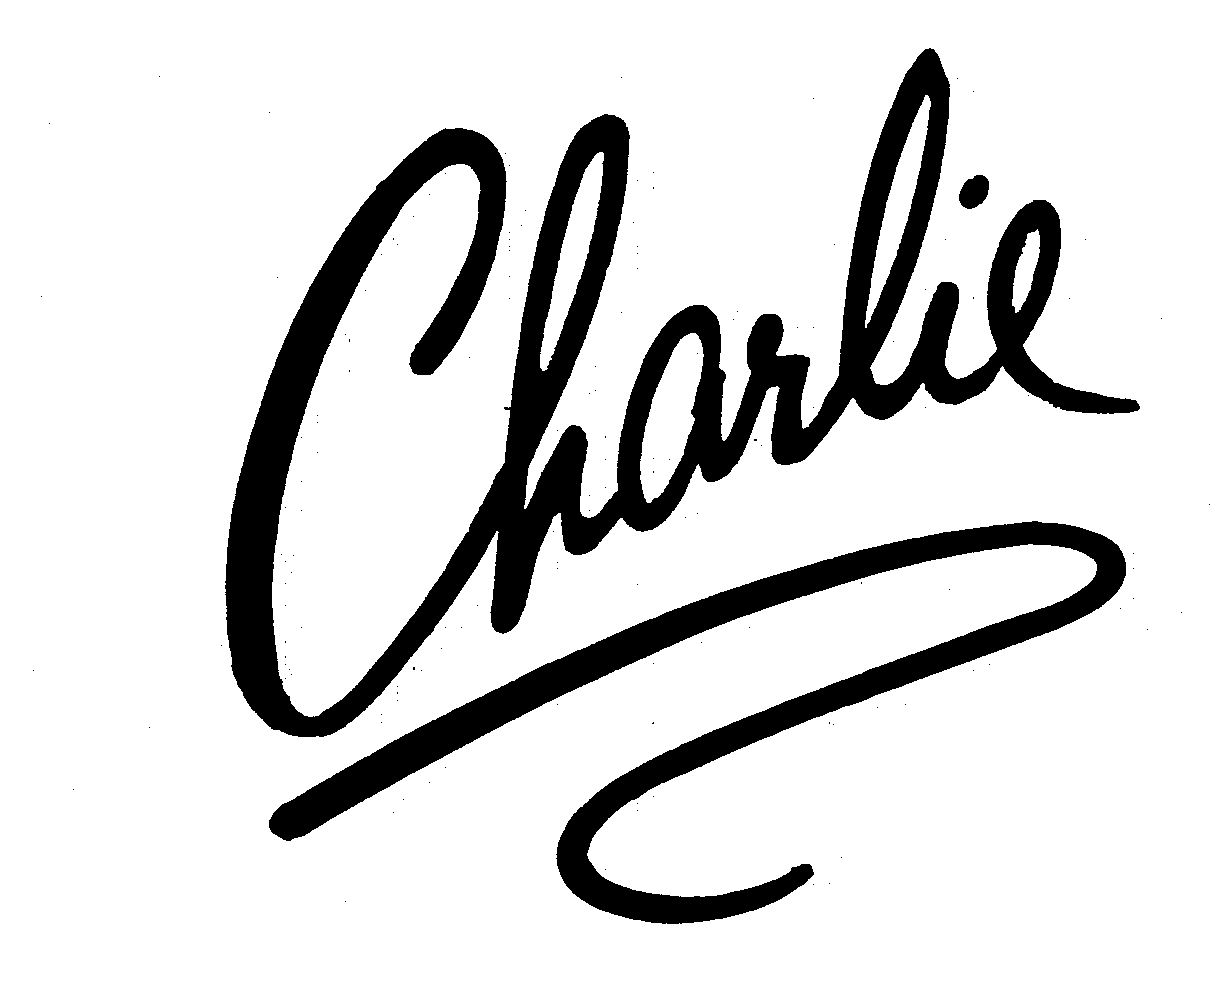  CHARLIE